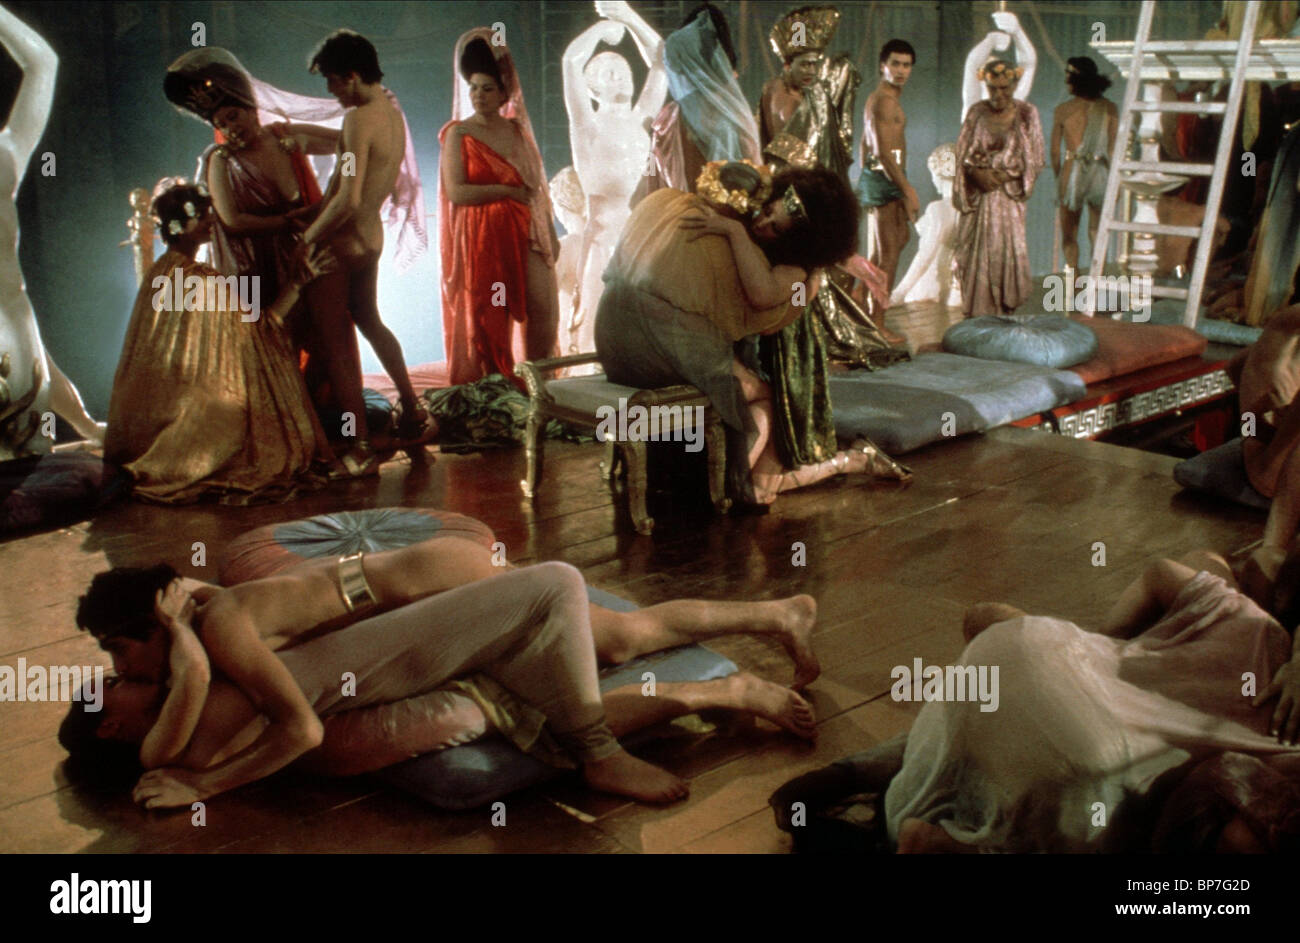 Orgy Scene From Caligula 89